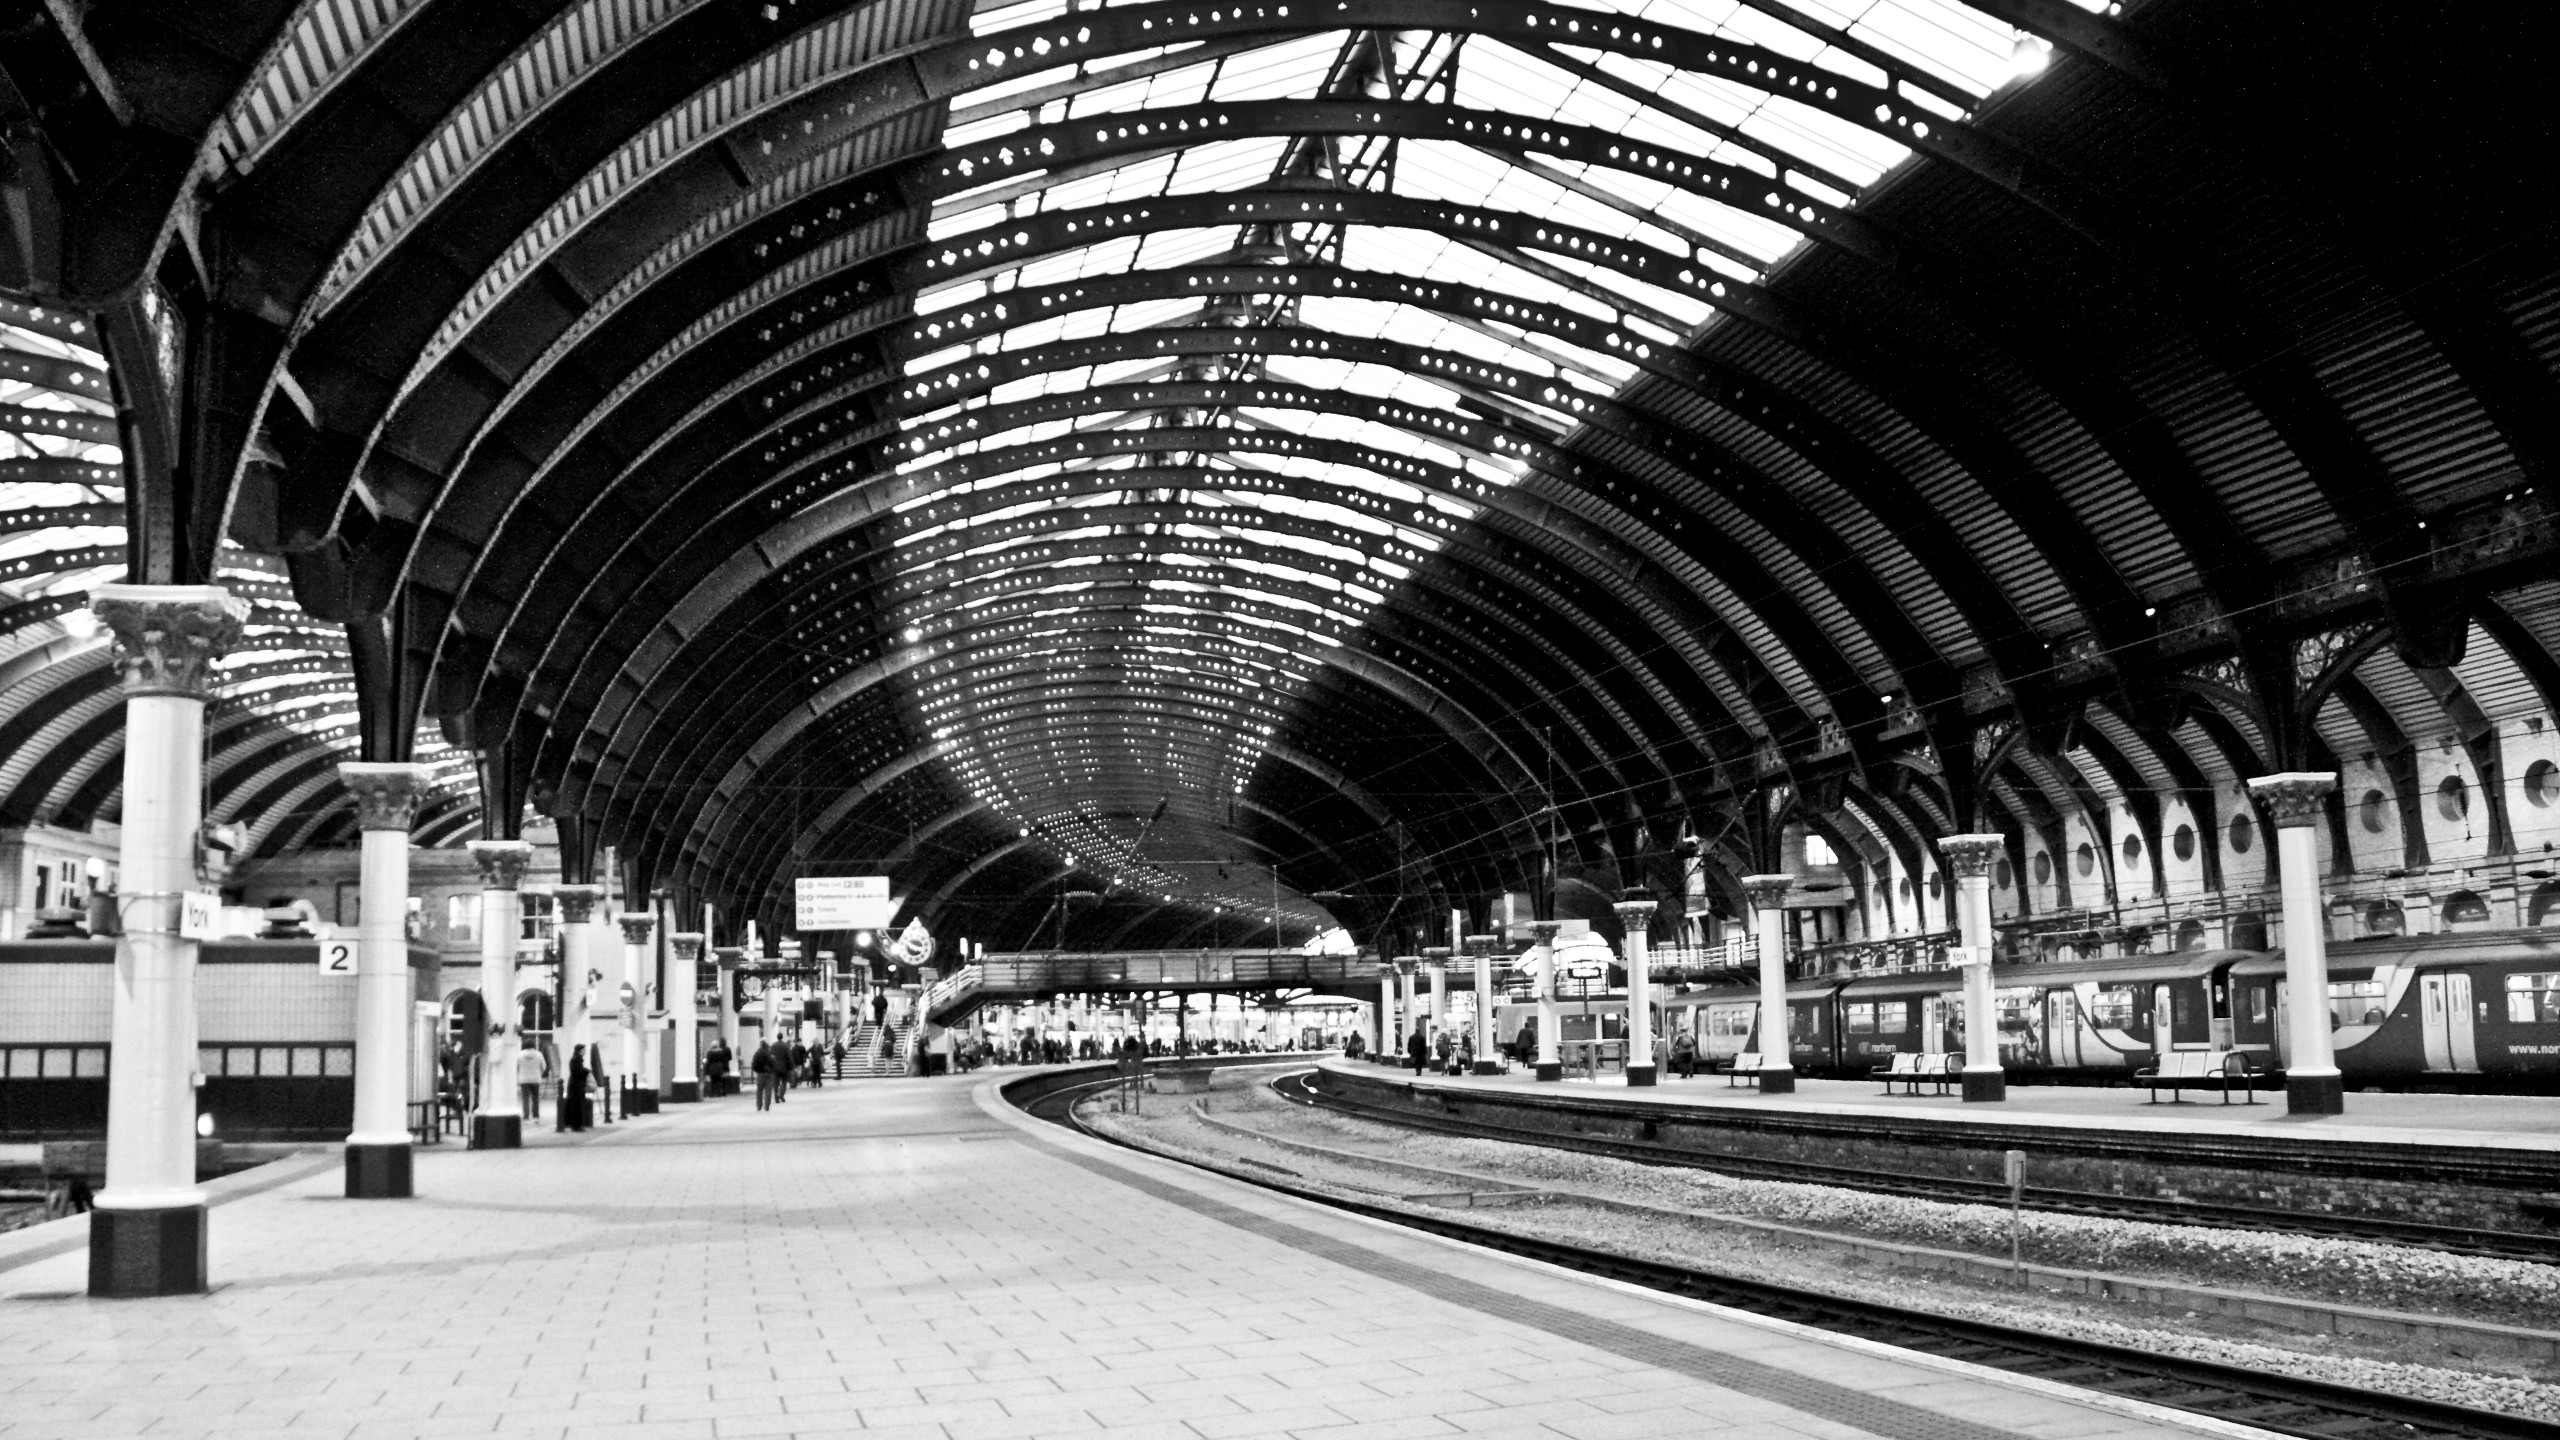 General 2560x1440 train station York England monochrome UK